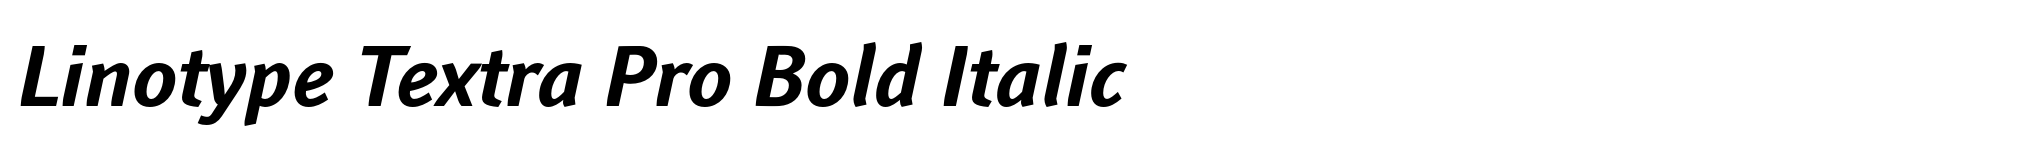 Linotype Textra Pro Bold Italic image